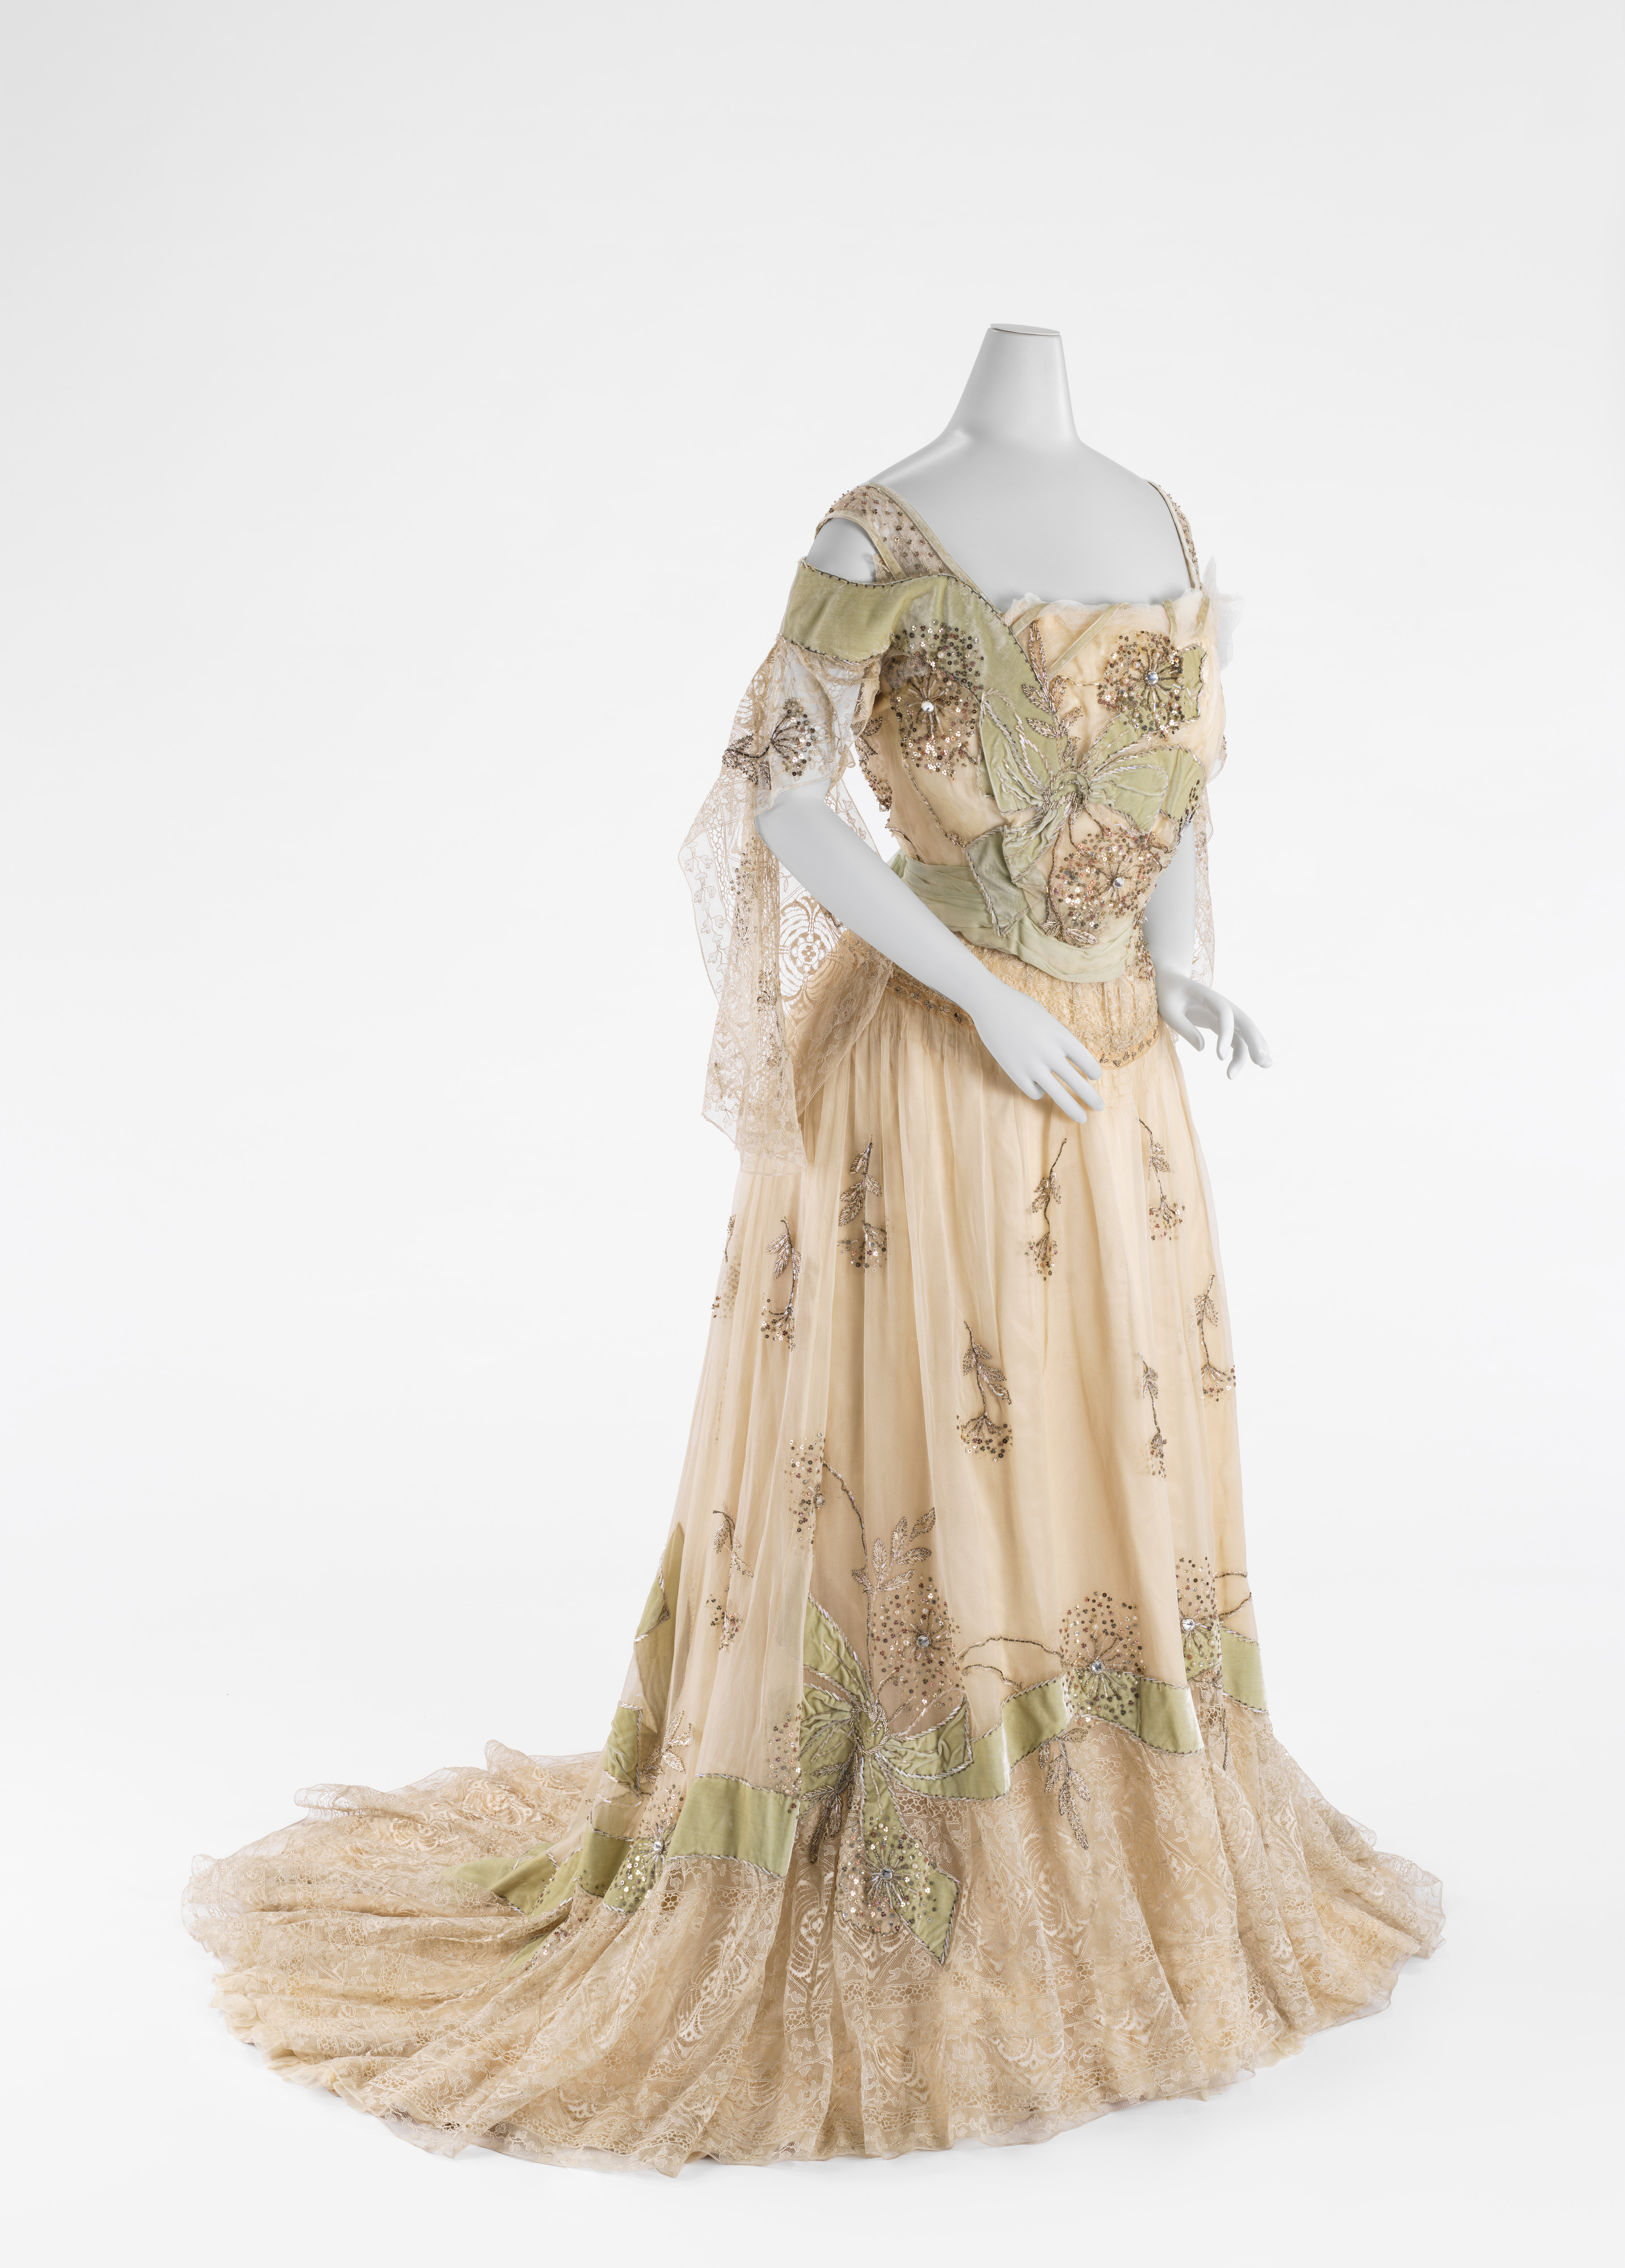 Lucie Monnay | Evening dress | American | The Metropolitan Museum of Art